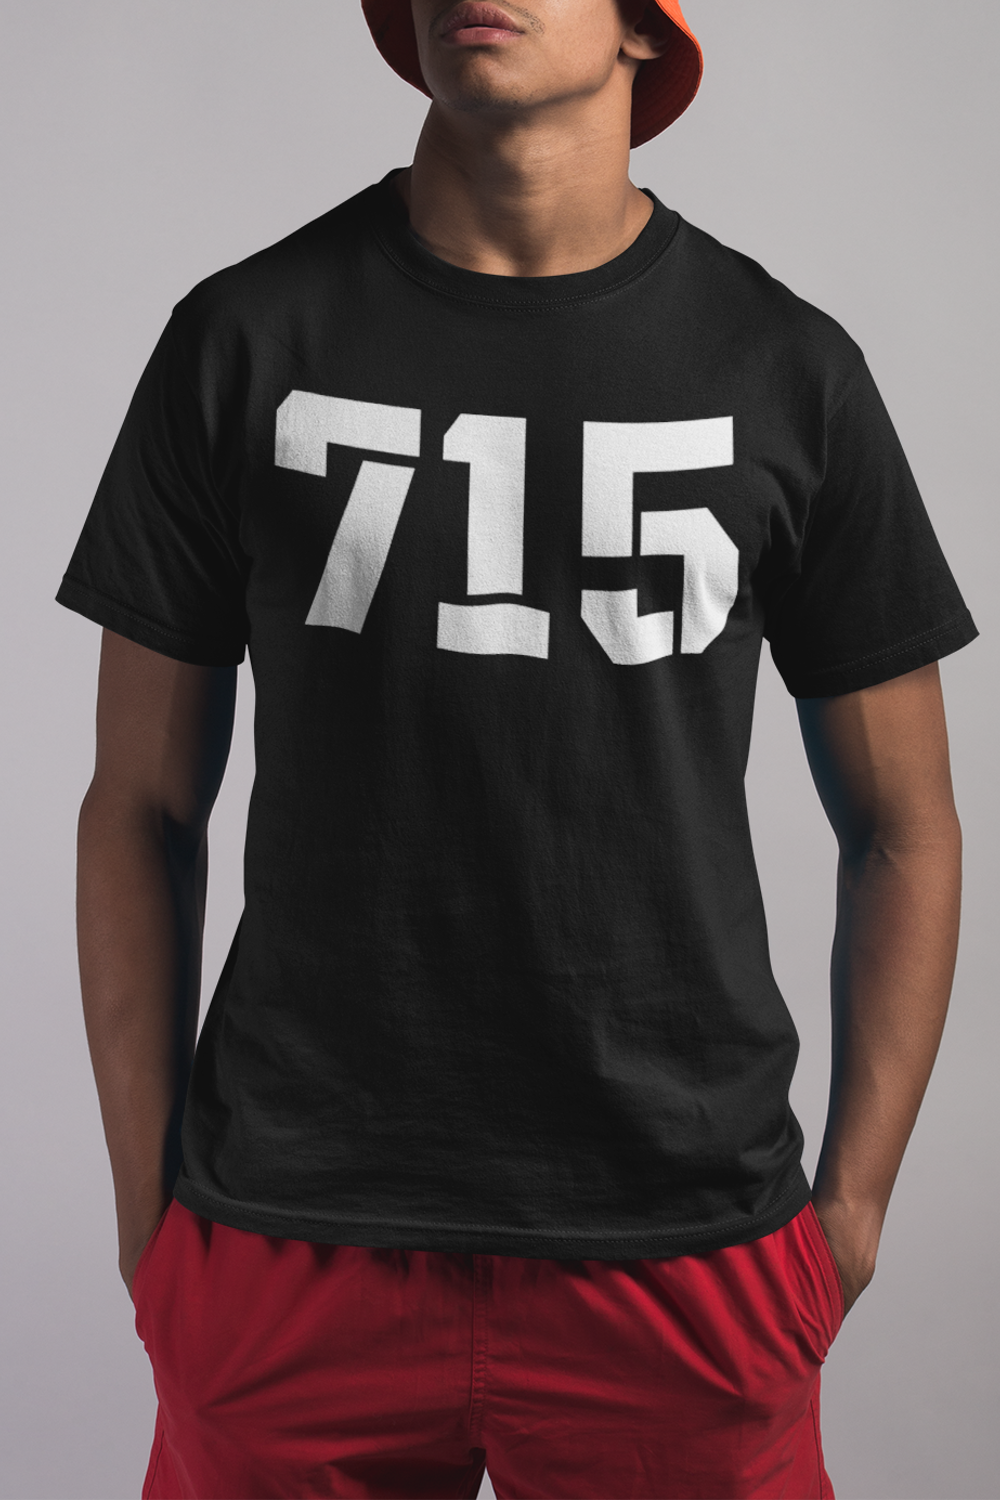 715 Crew Men's Classic Black T-Shirt by OniTakai